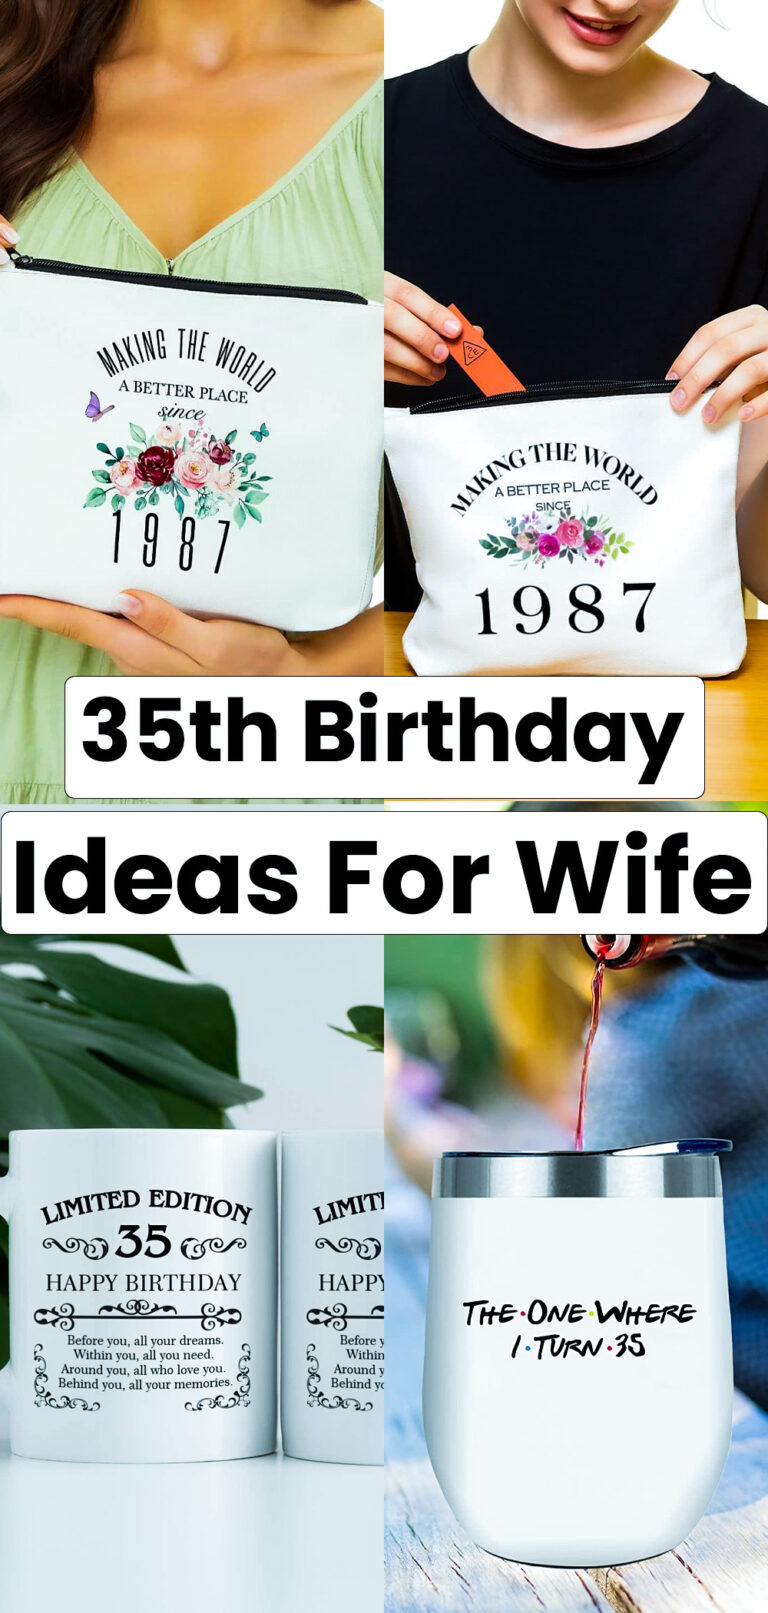 35th Birthday Ideas for Wife